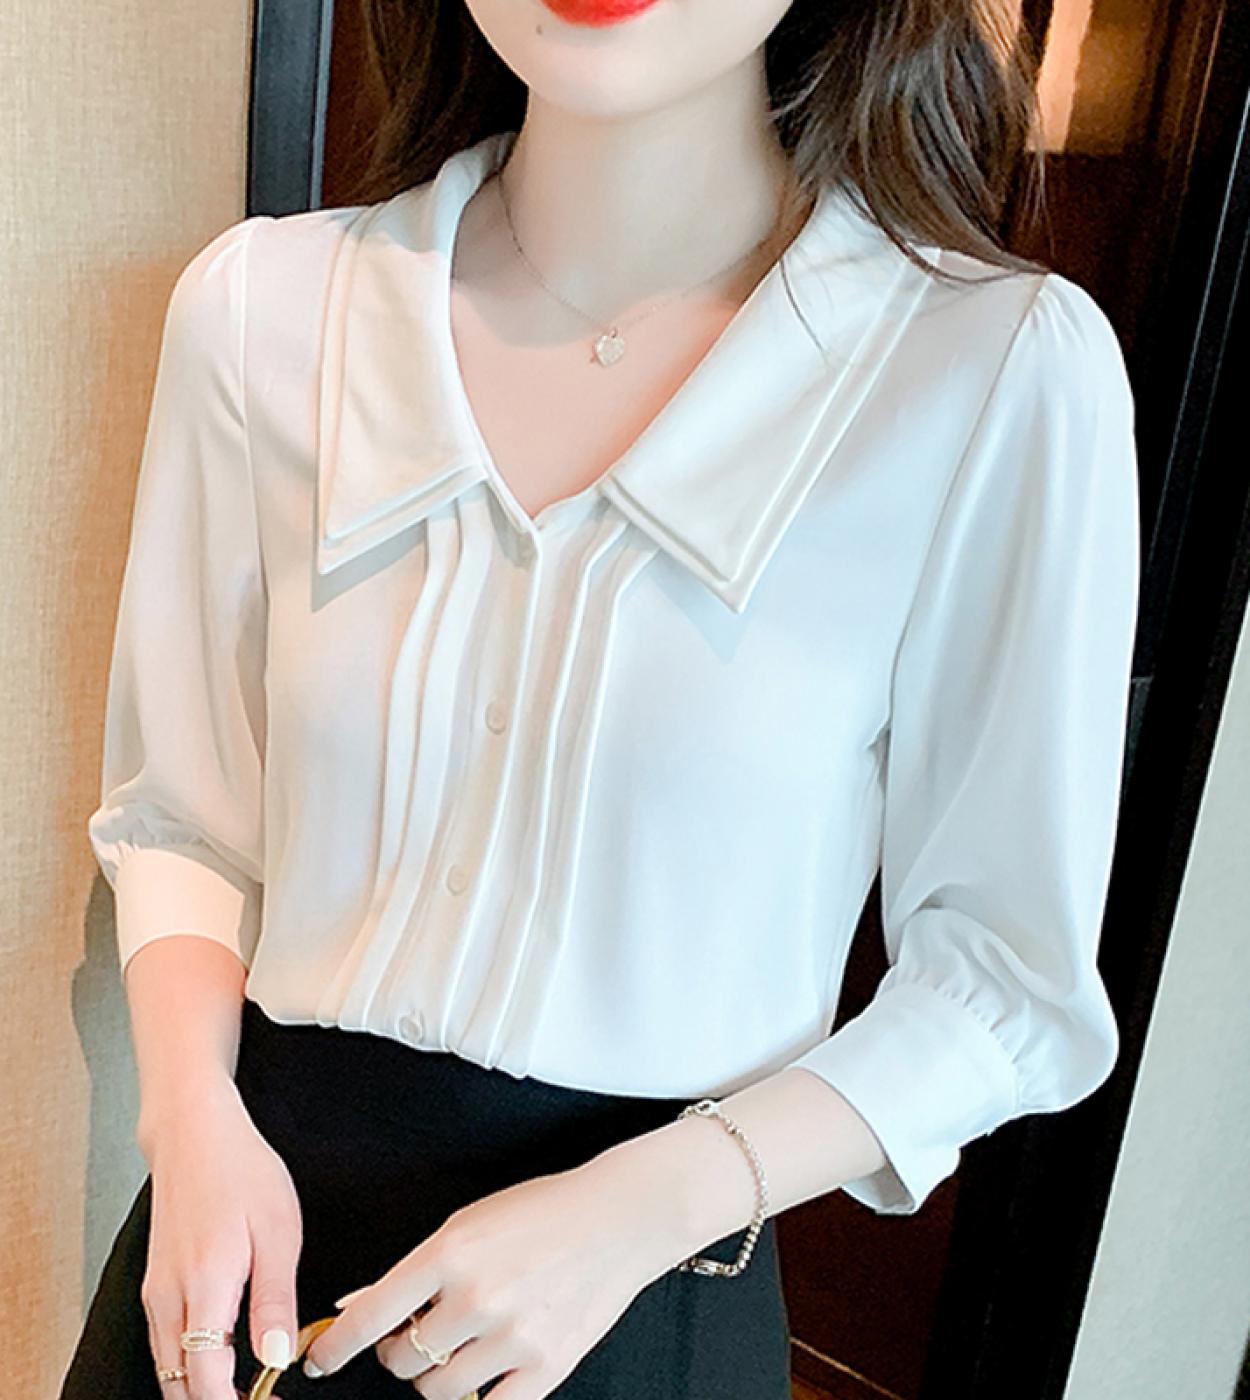 Summer Elegant Doll Collar Blouse Women Sweet White Office Lady Loose Shirt Three Quarter Sleeve Chiffon Buttons Tops 25